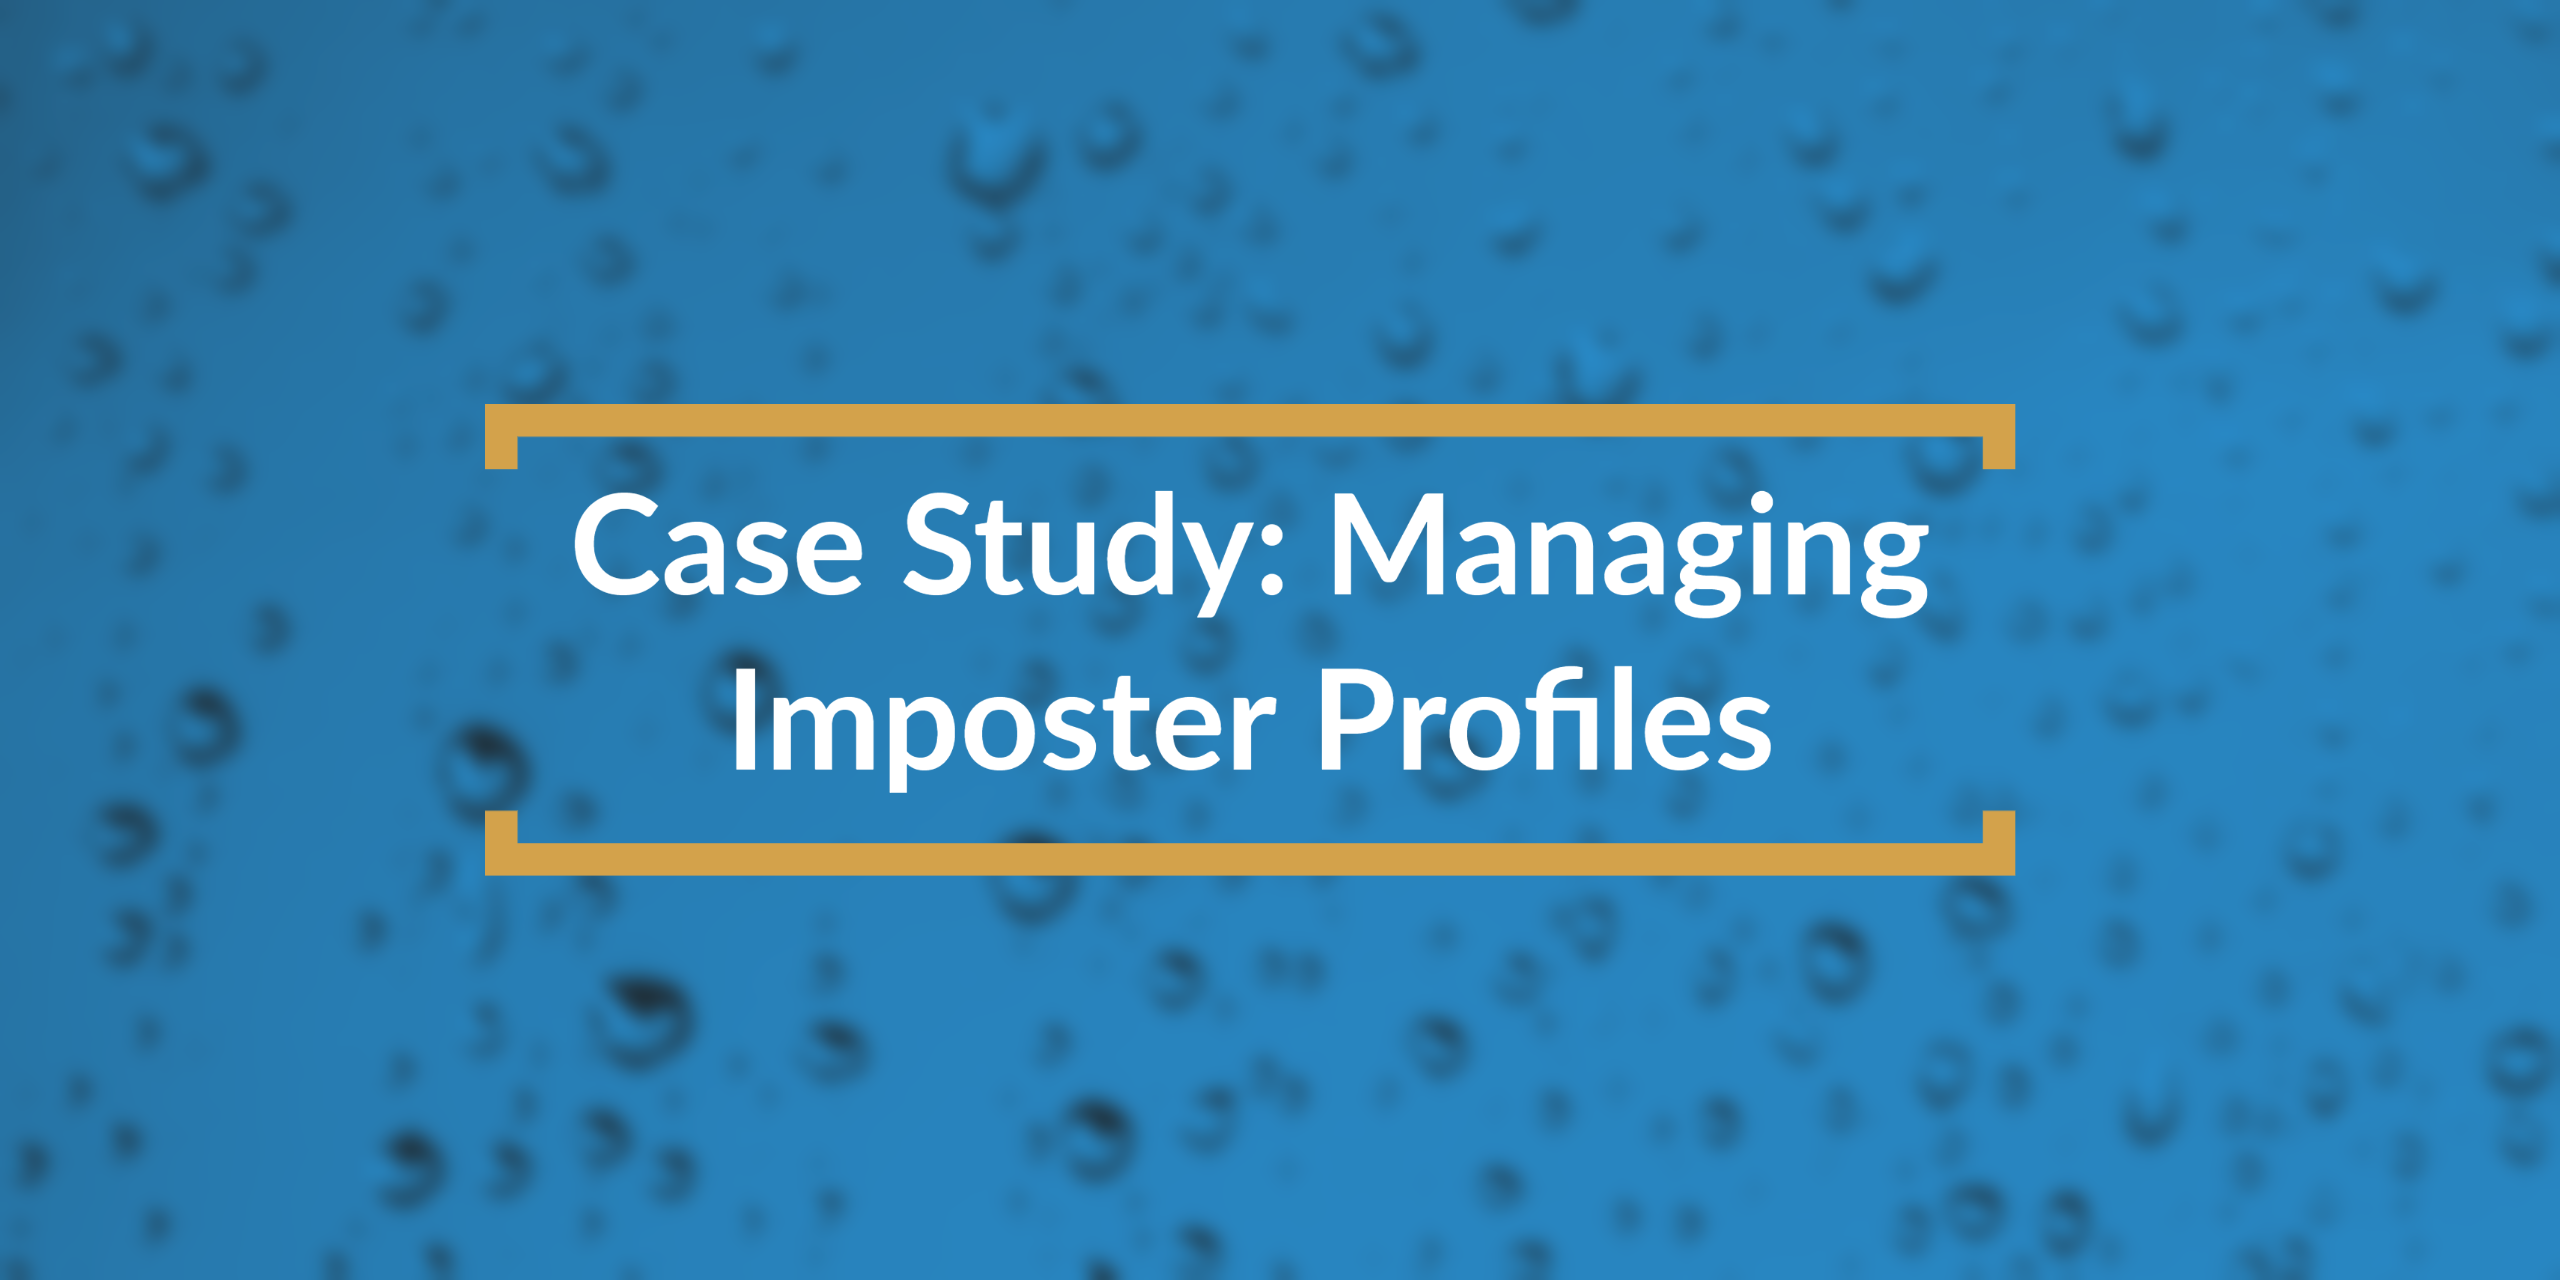 Managing Imposter Profiles Case Study